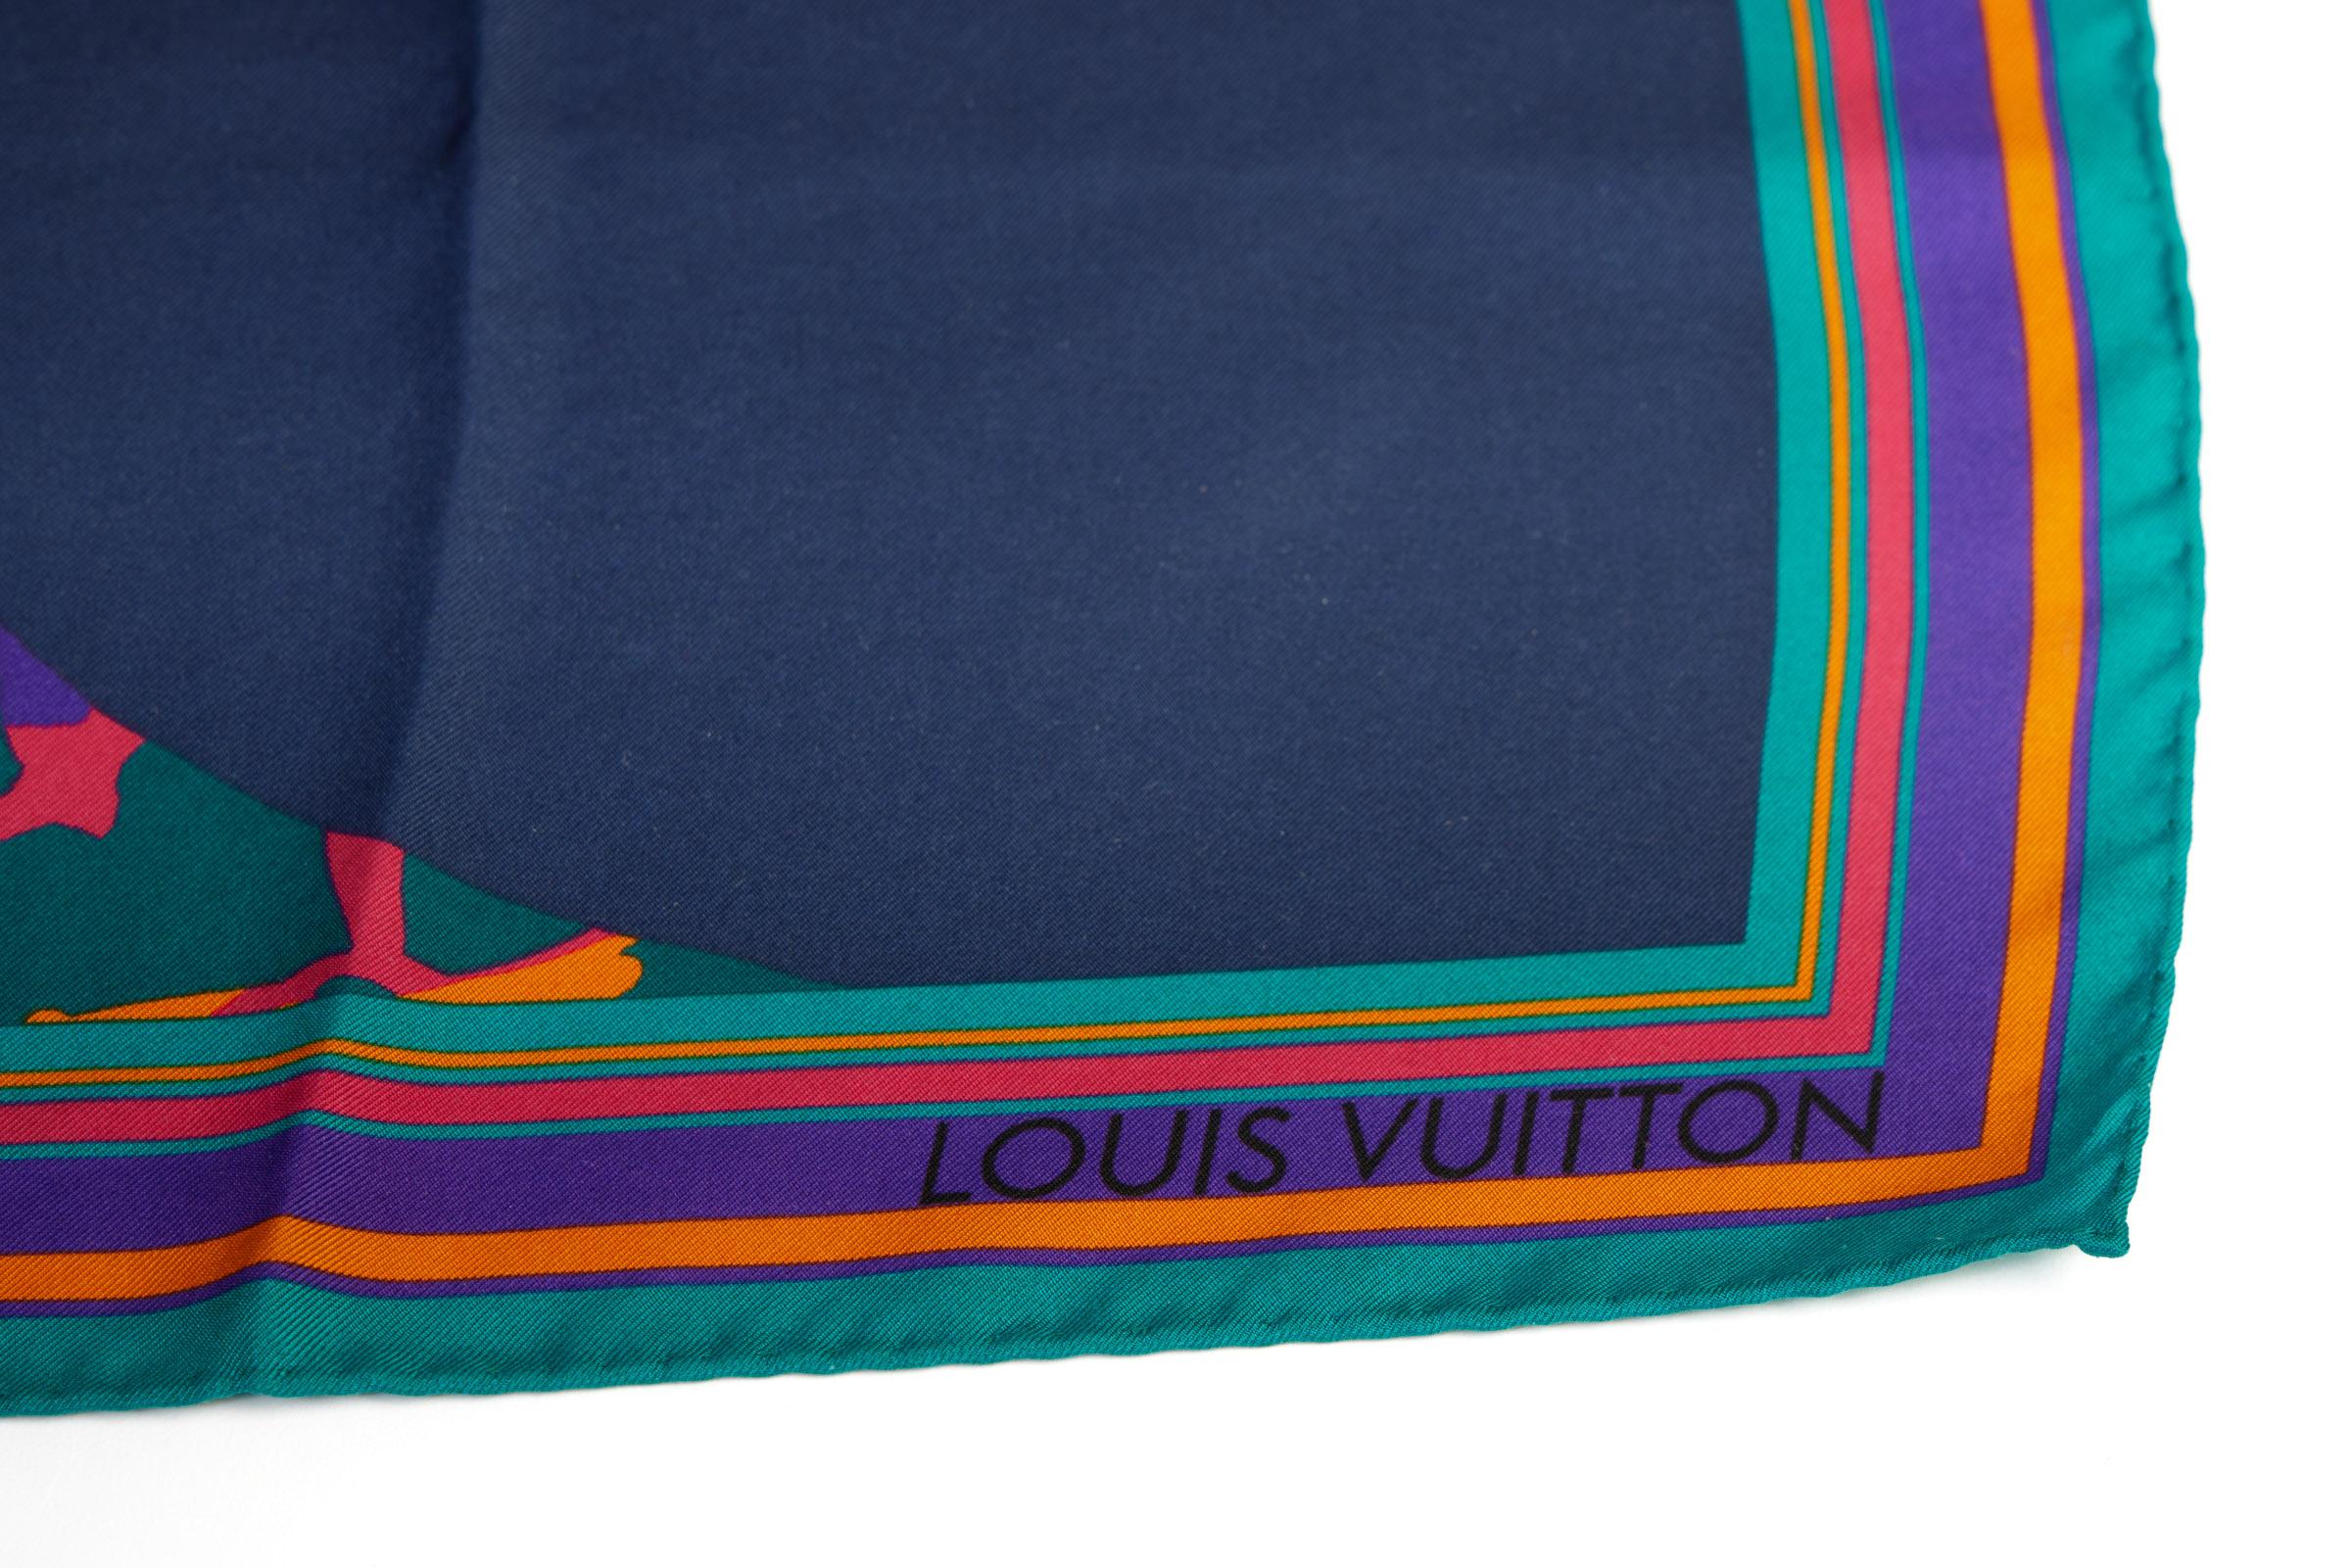 Louis Vuitton small silk scarf with giraffe design. Hand rolled edges.